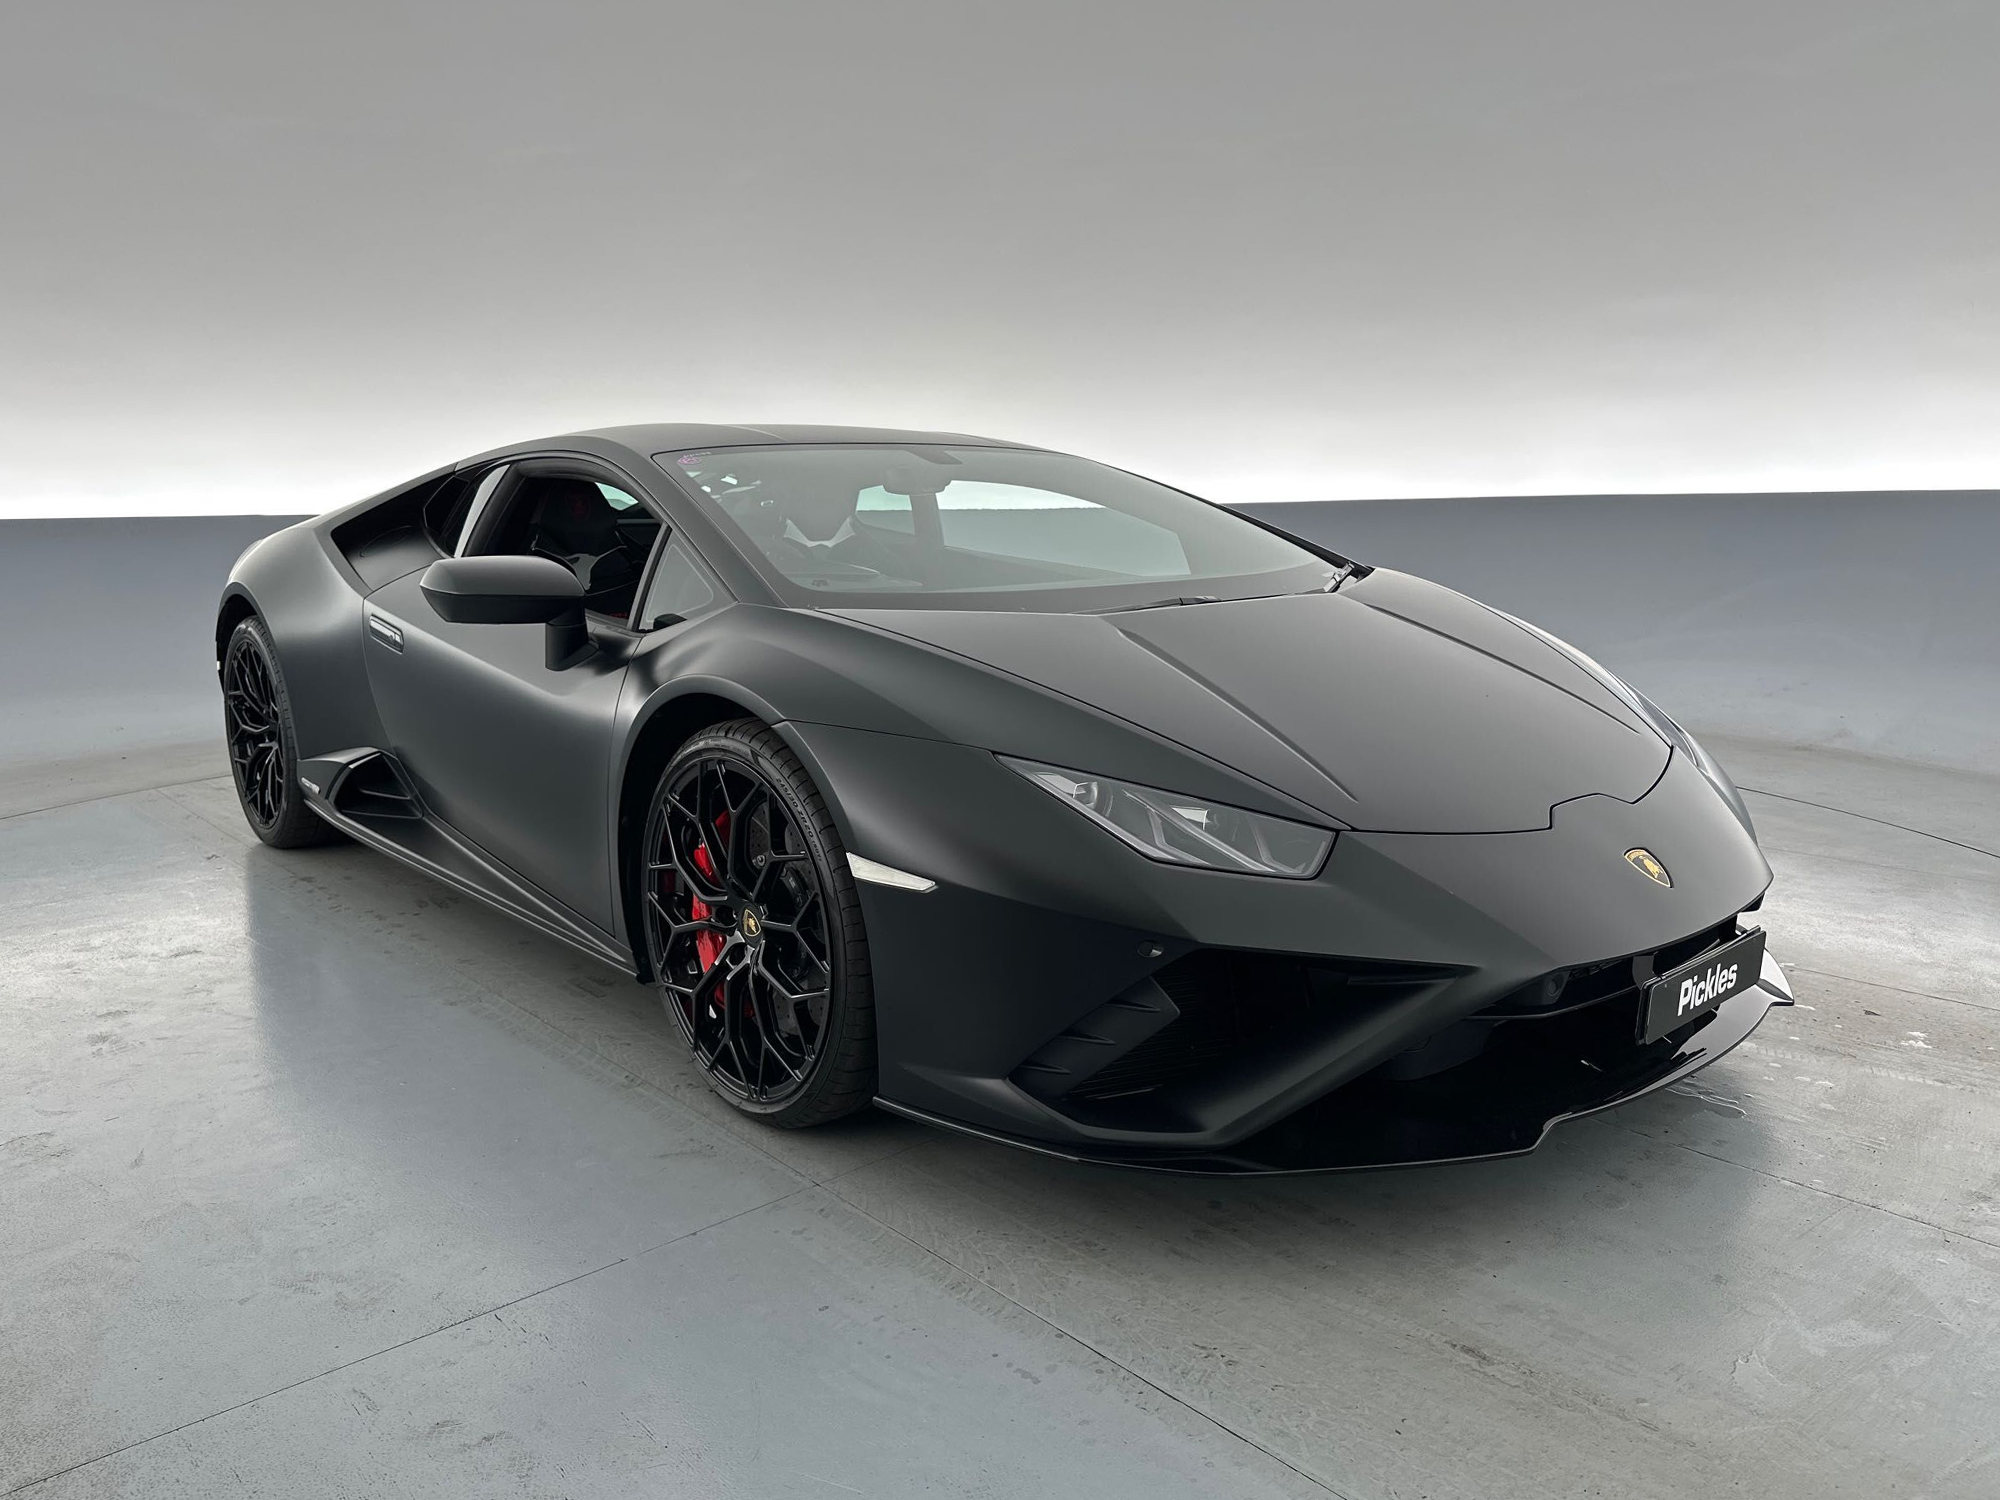 View a black 2021 Lamborghini Huracan STO available via auction.